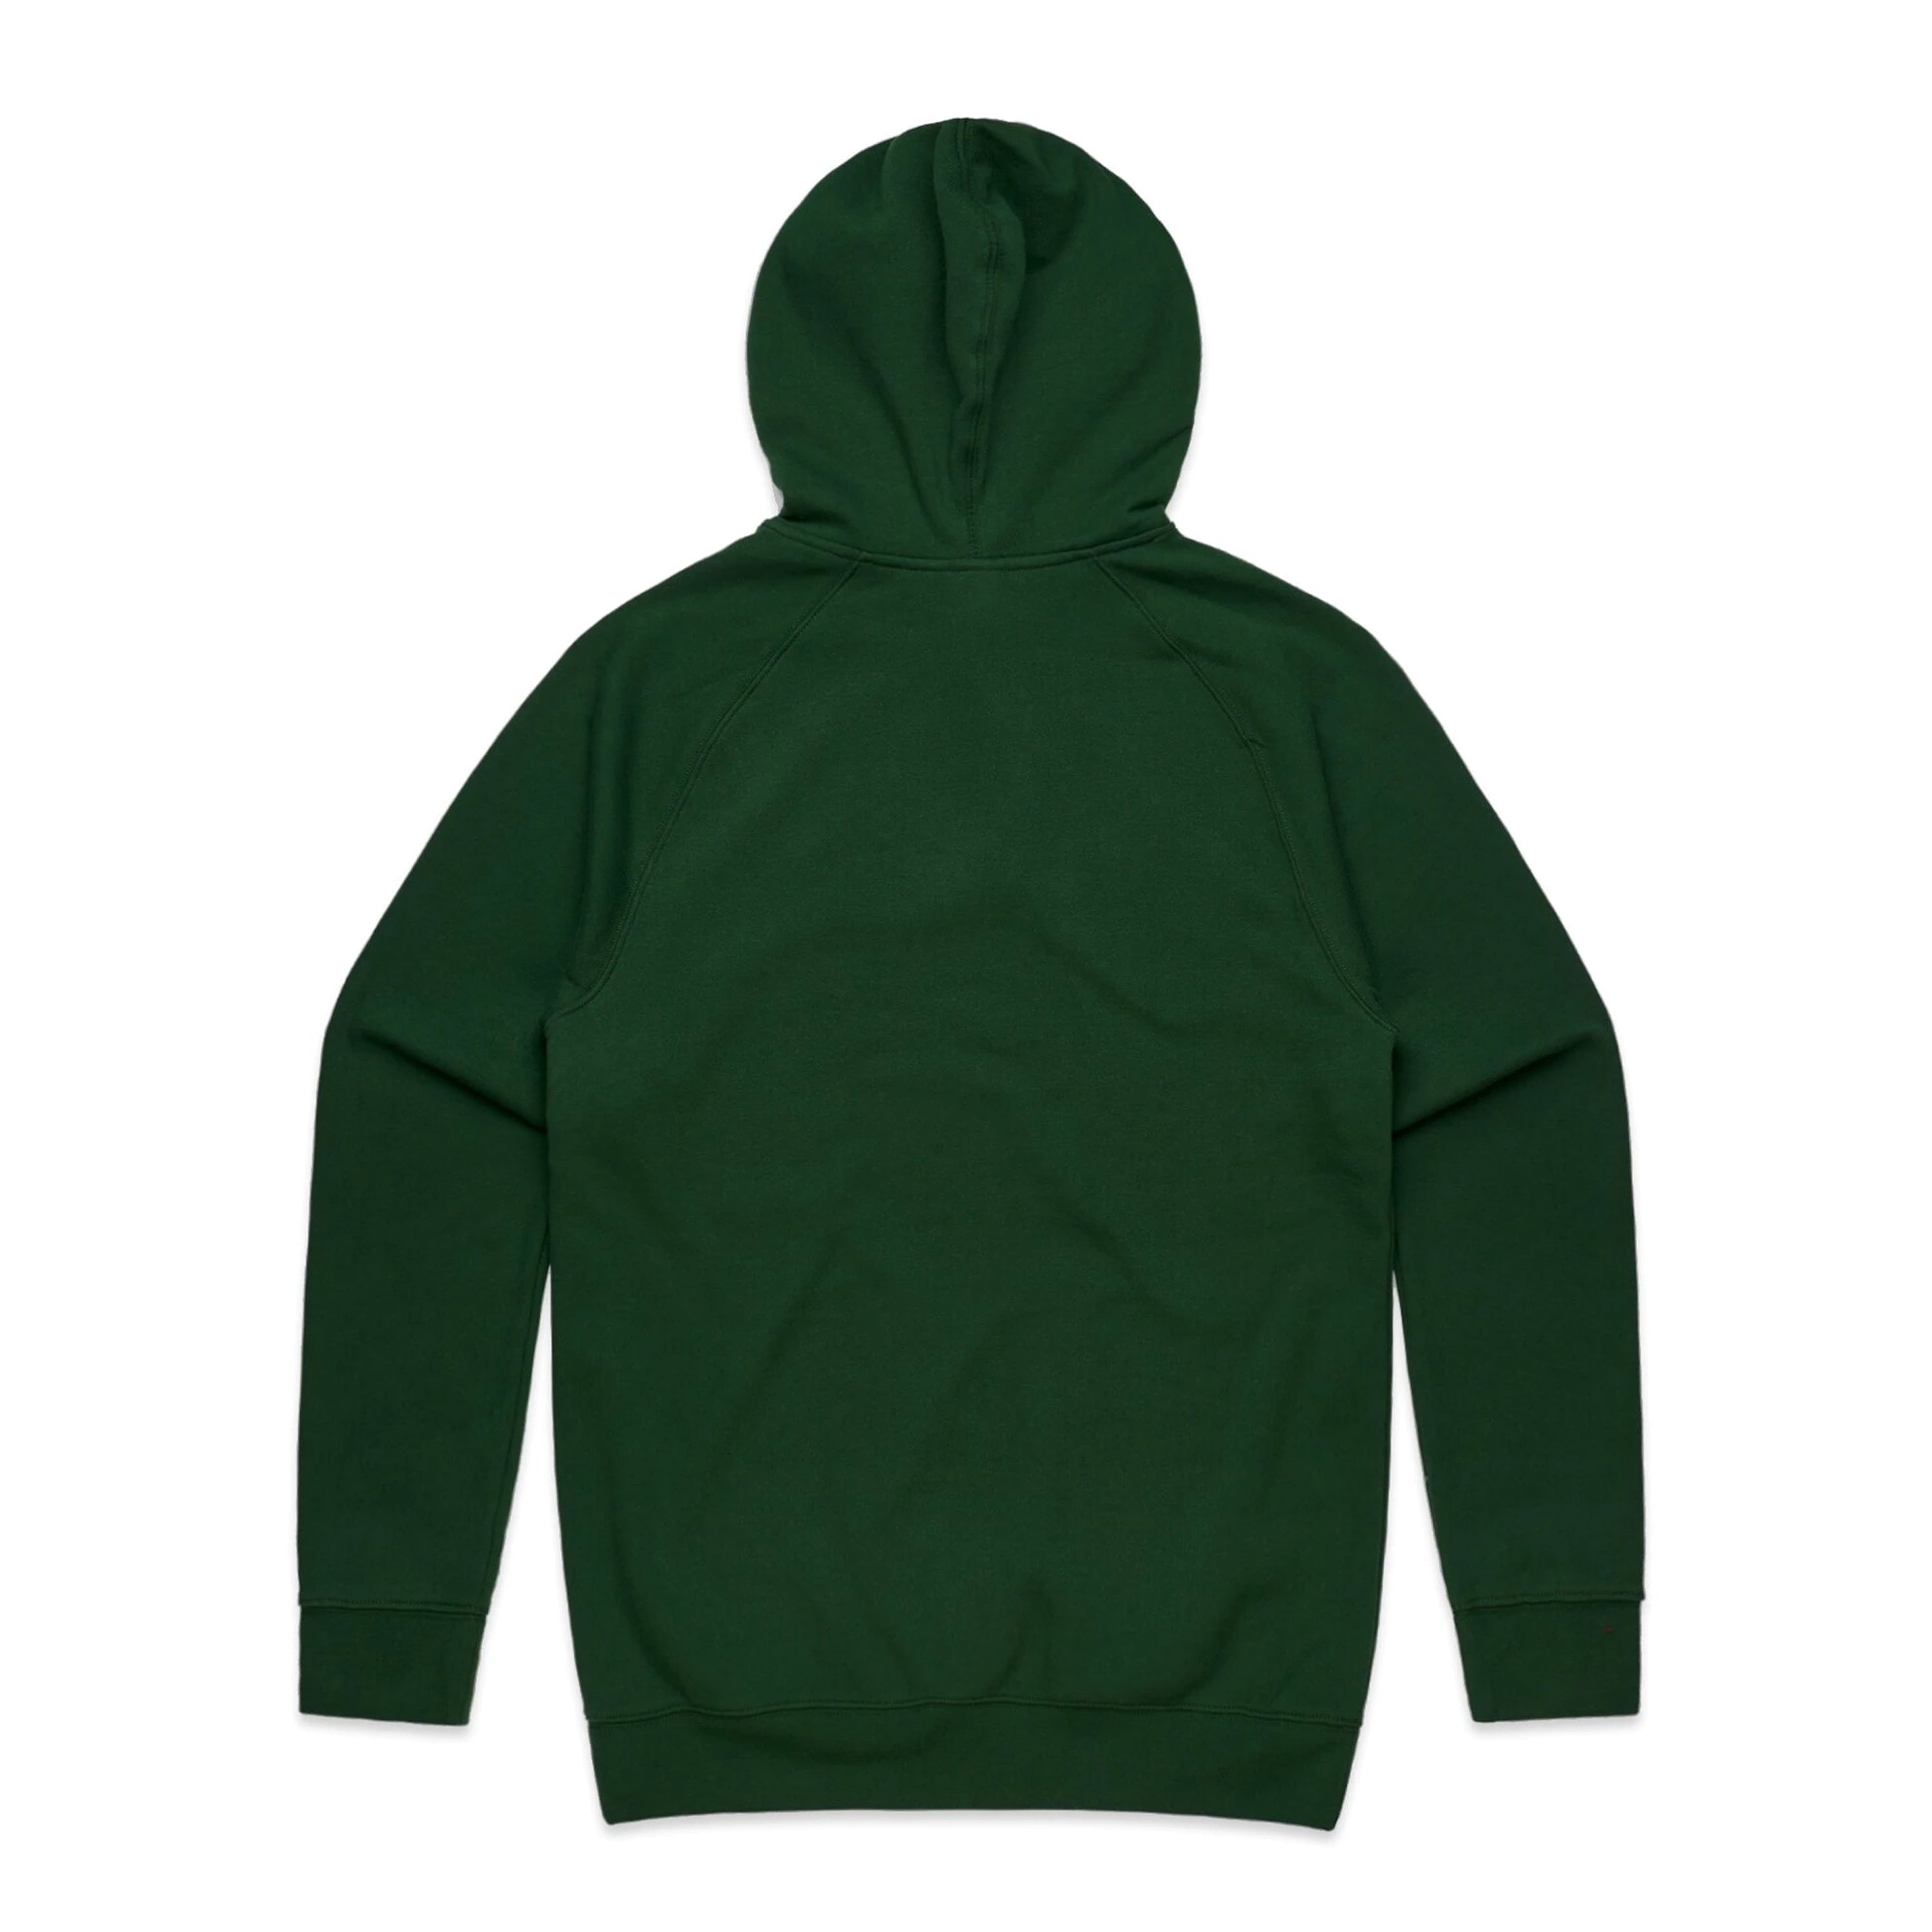 black and pine green hoodie